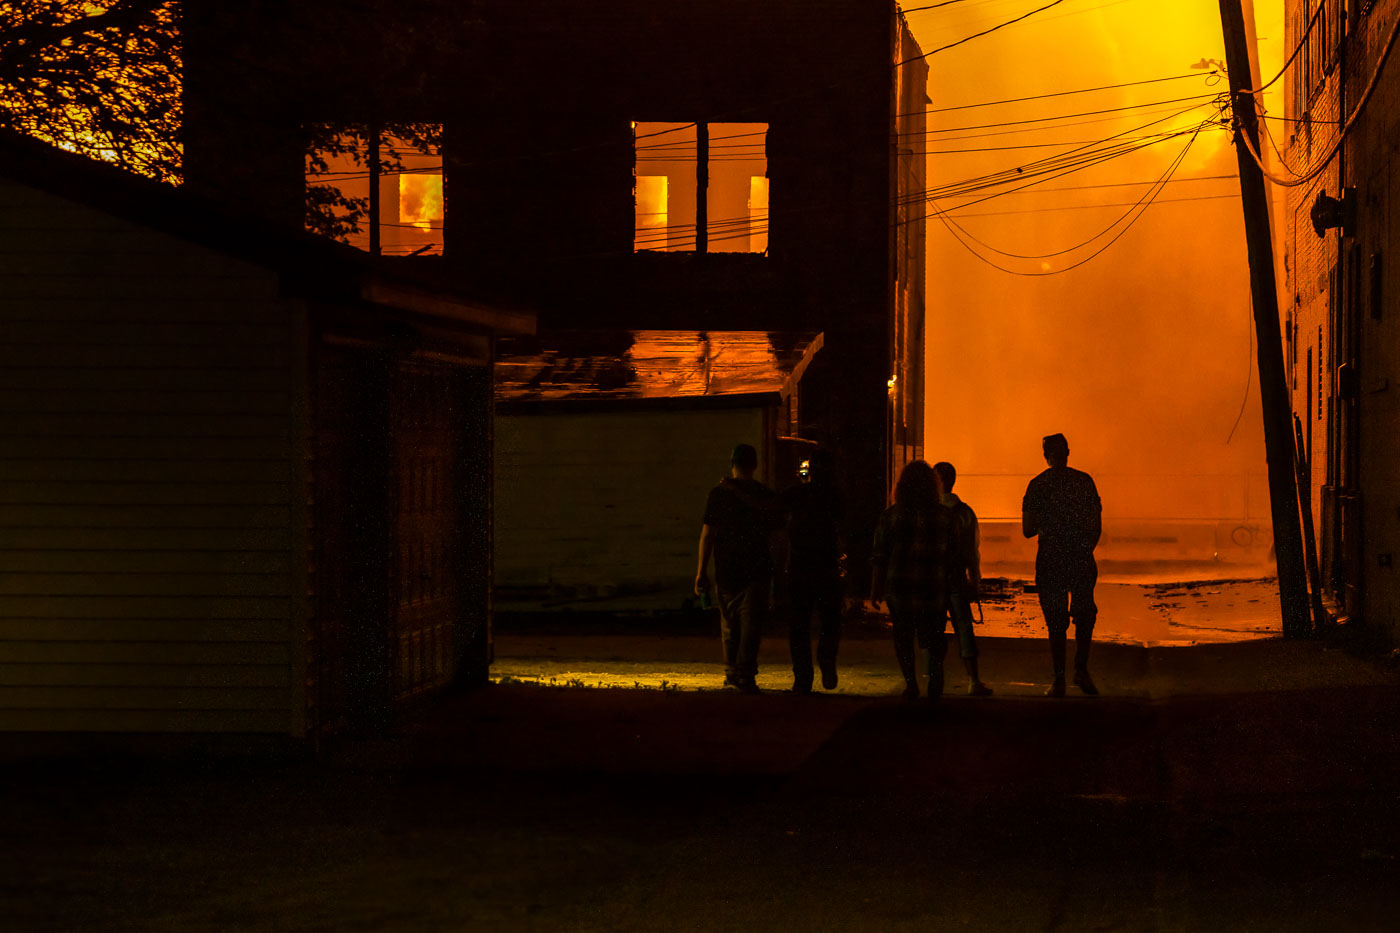 Fires burn as group walks down alley